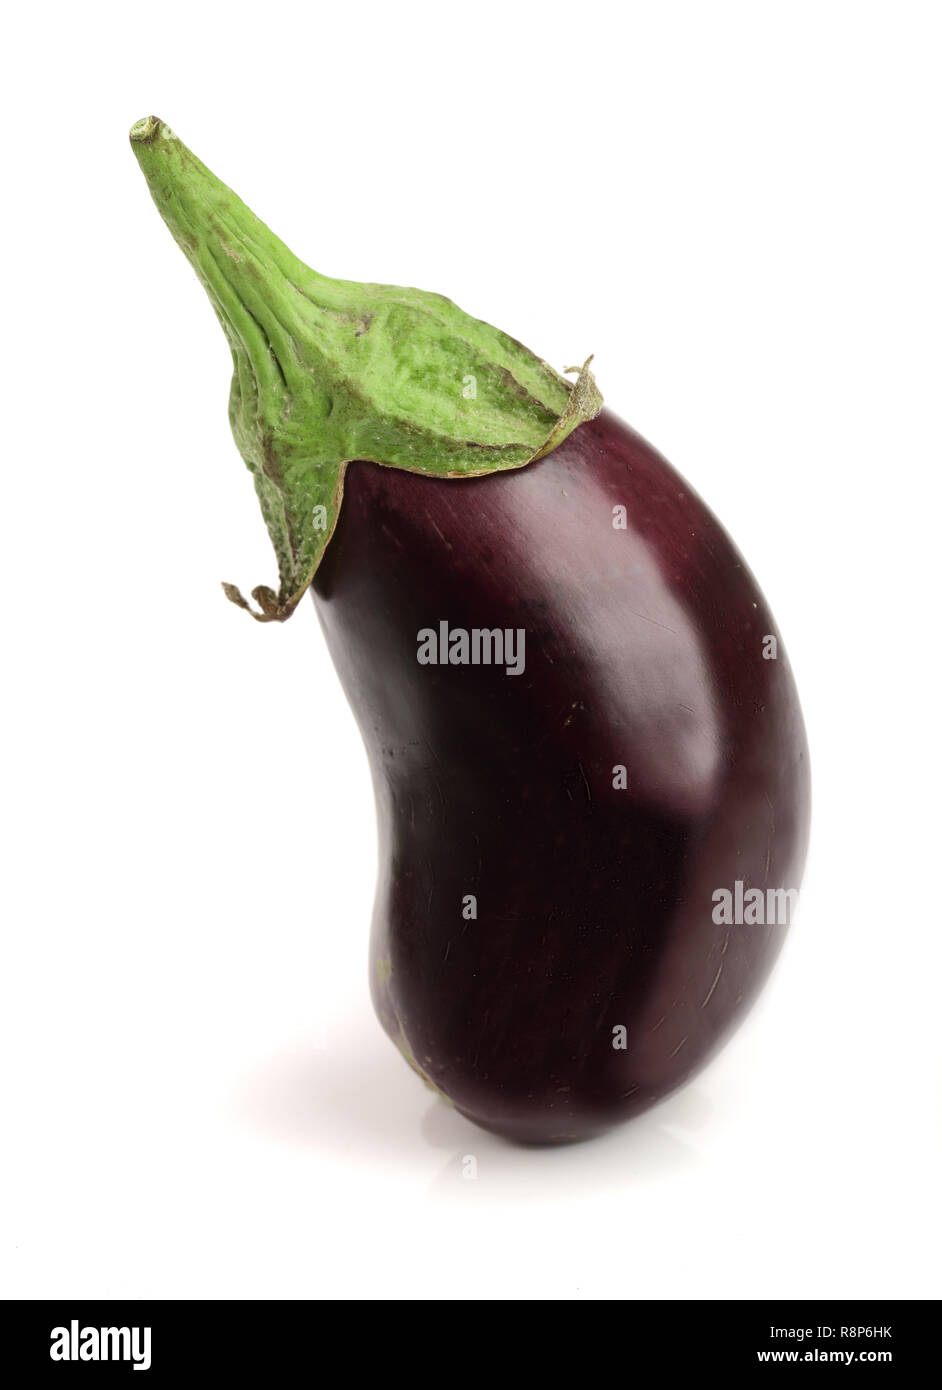 Eggplant or aubergine vegetable isolated on white background Stock Photo